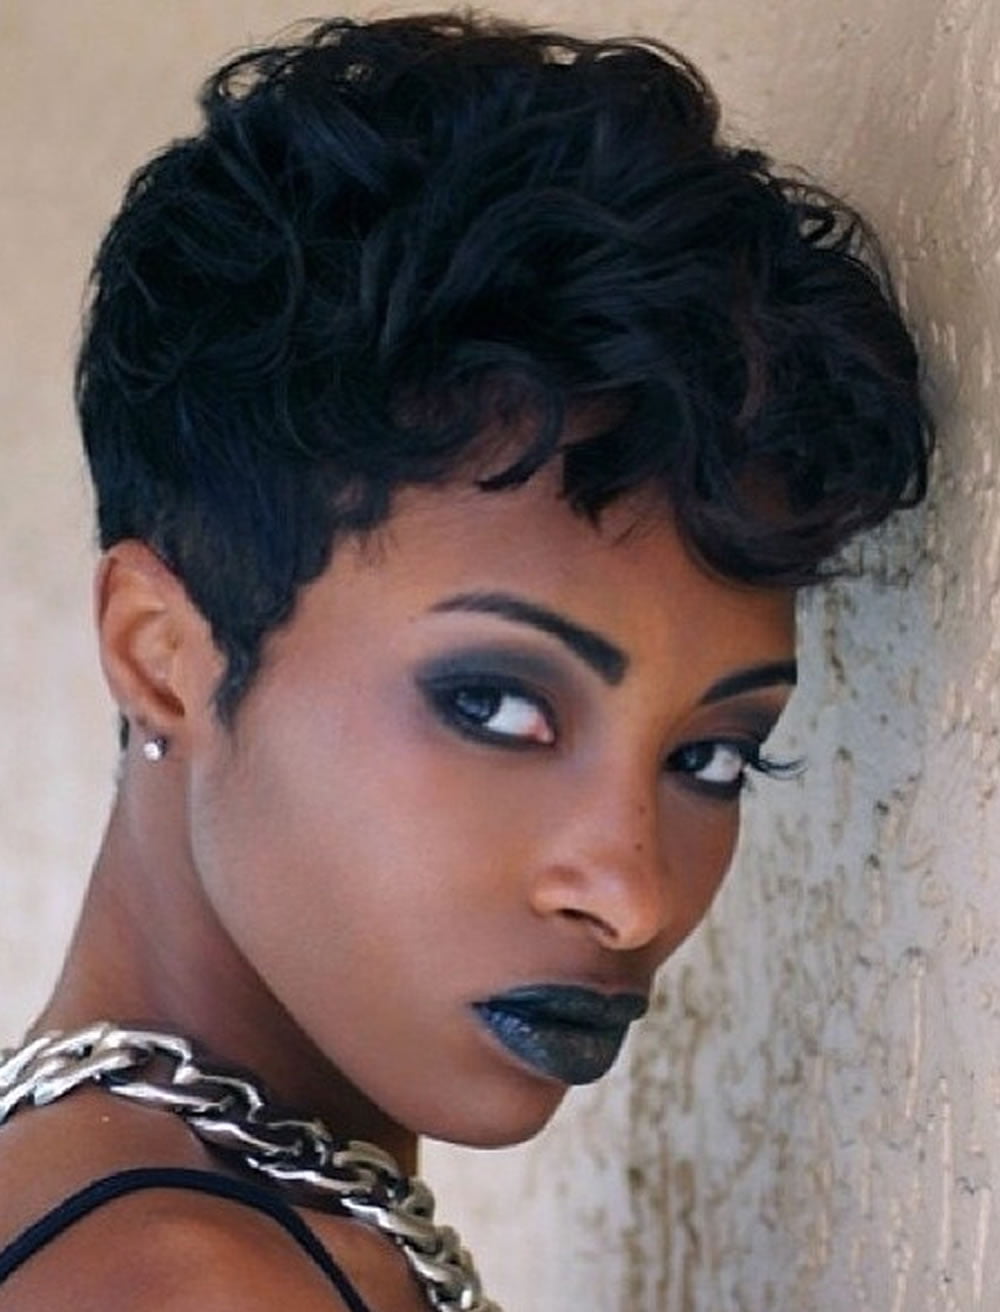 Pixie haircut 2019 for African American Women | Black hair ...